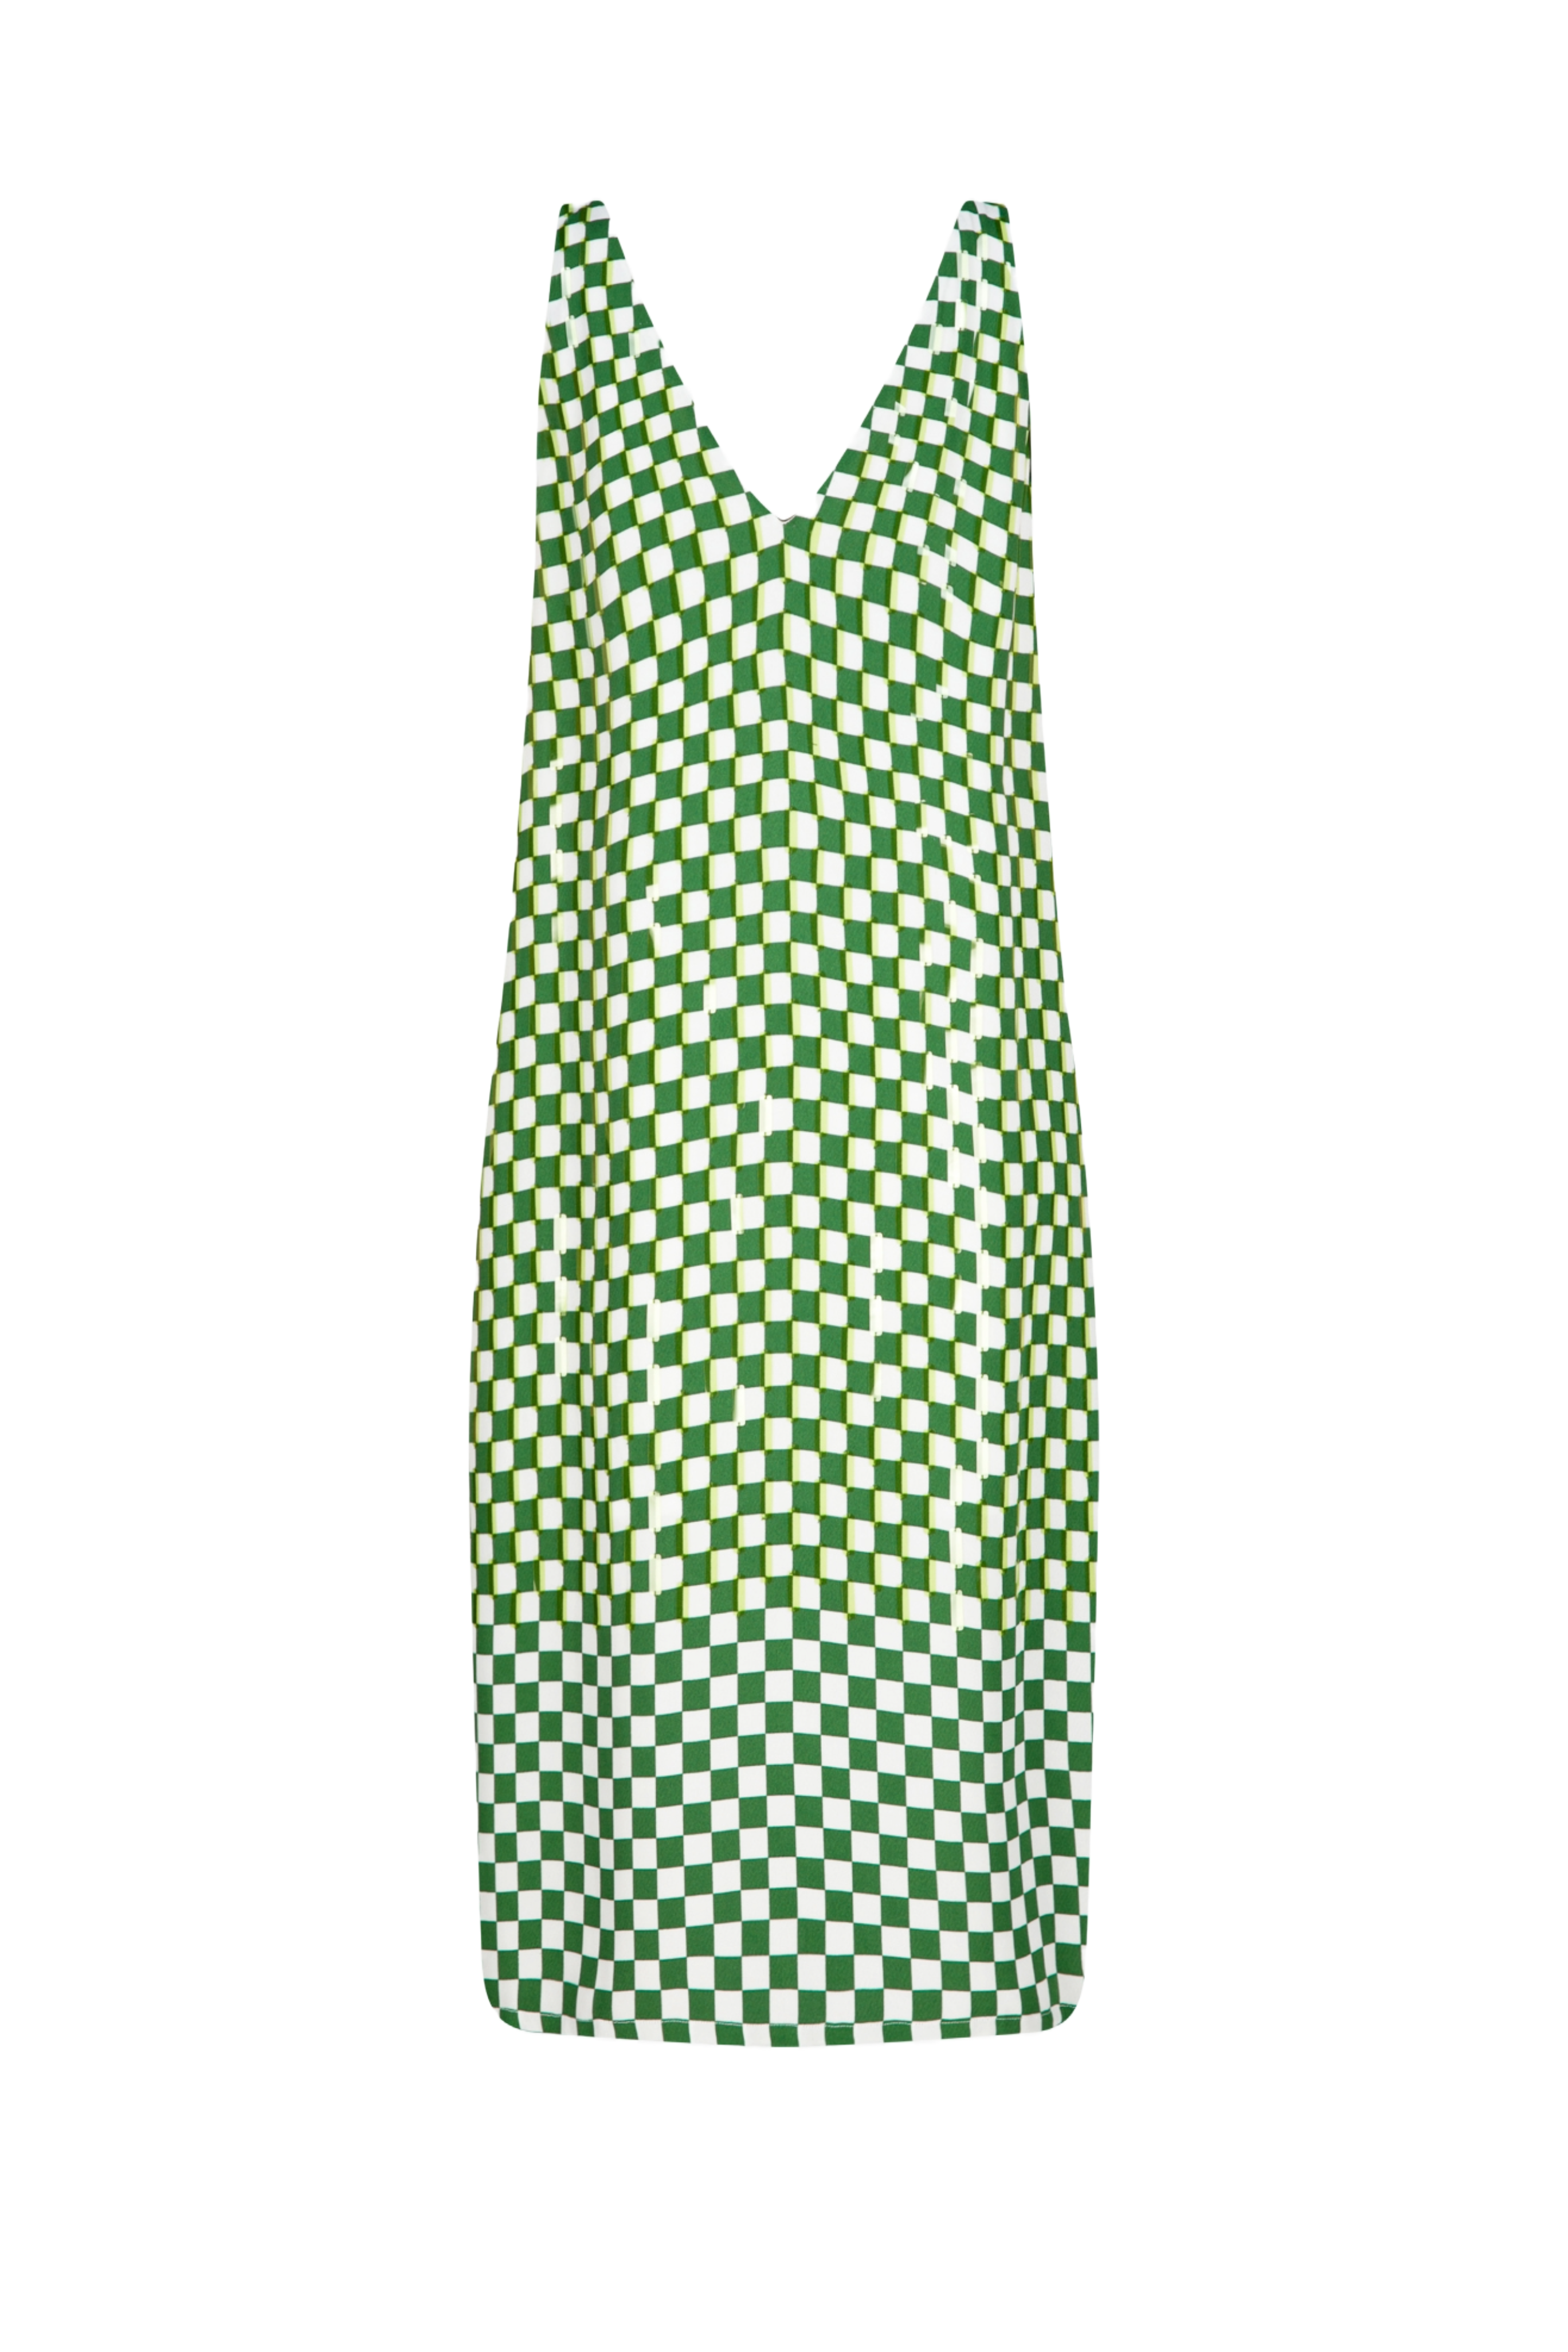 DRIES VAN NOTEN Embellished Checkered Print Dress